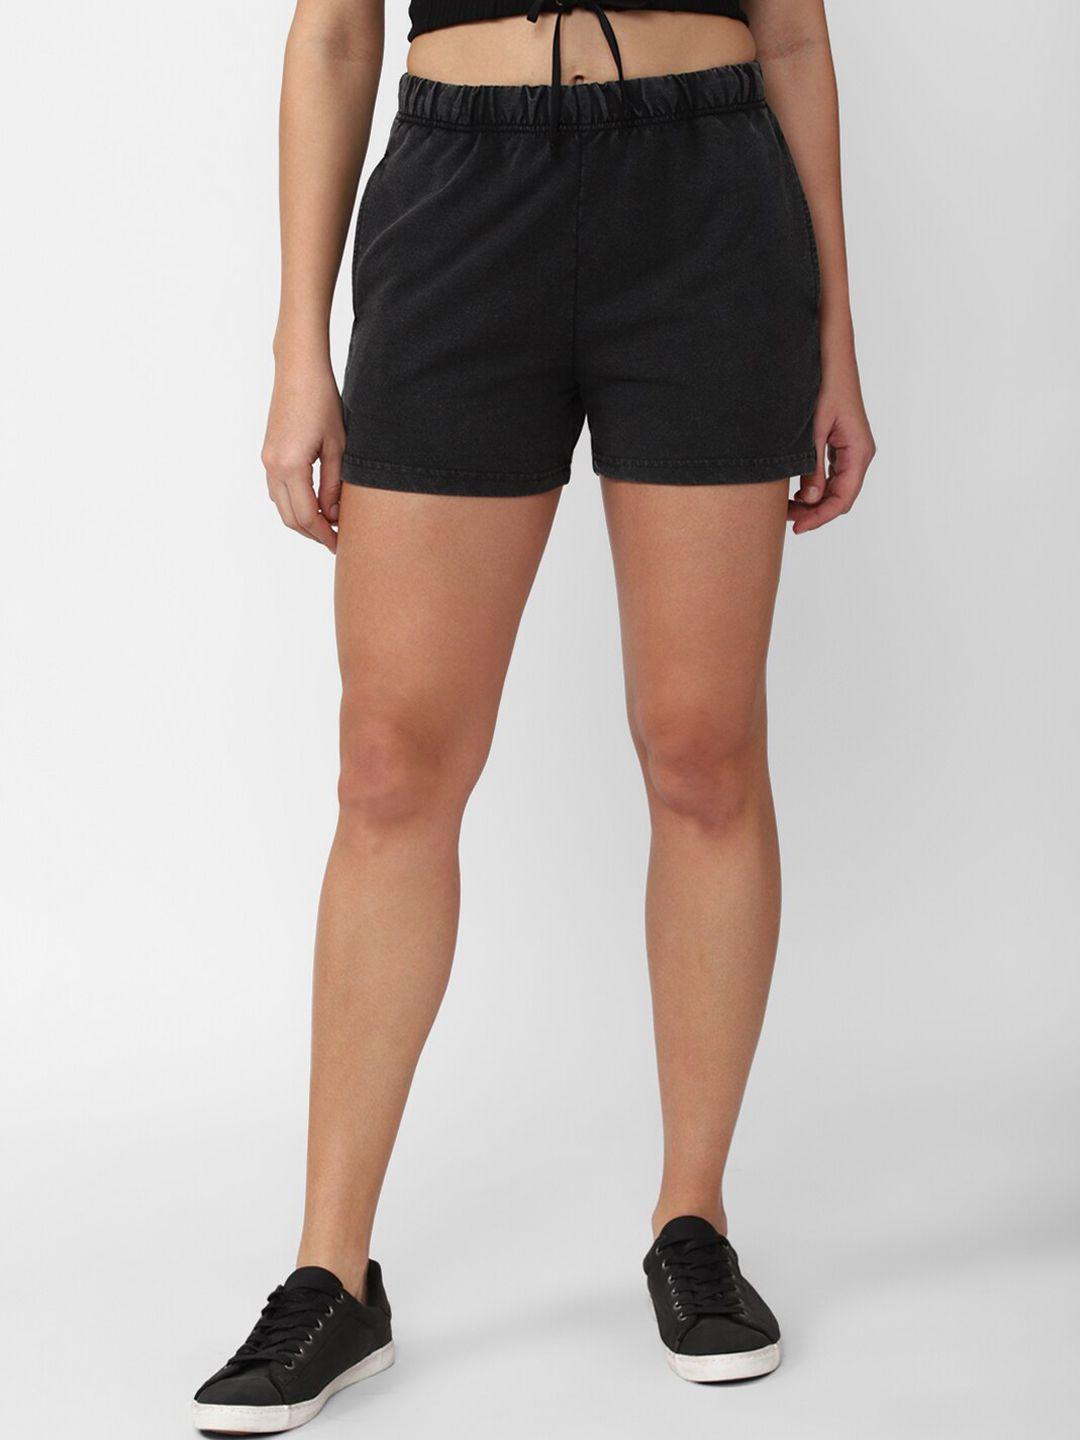 forever-21-women-black-solid-shorts